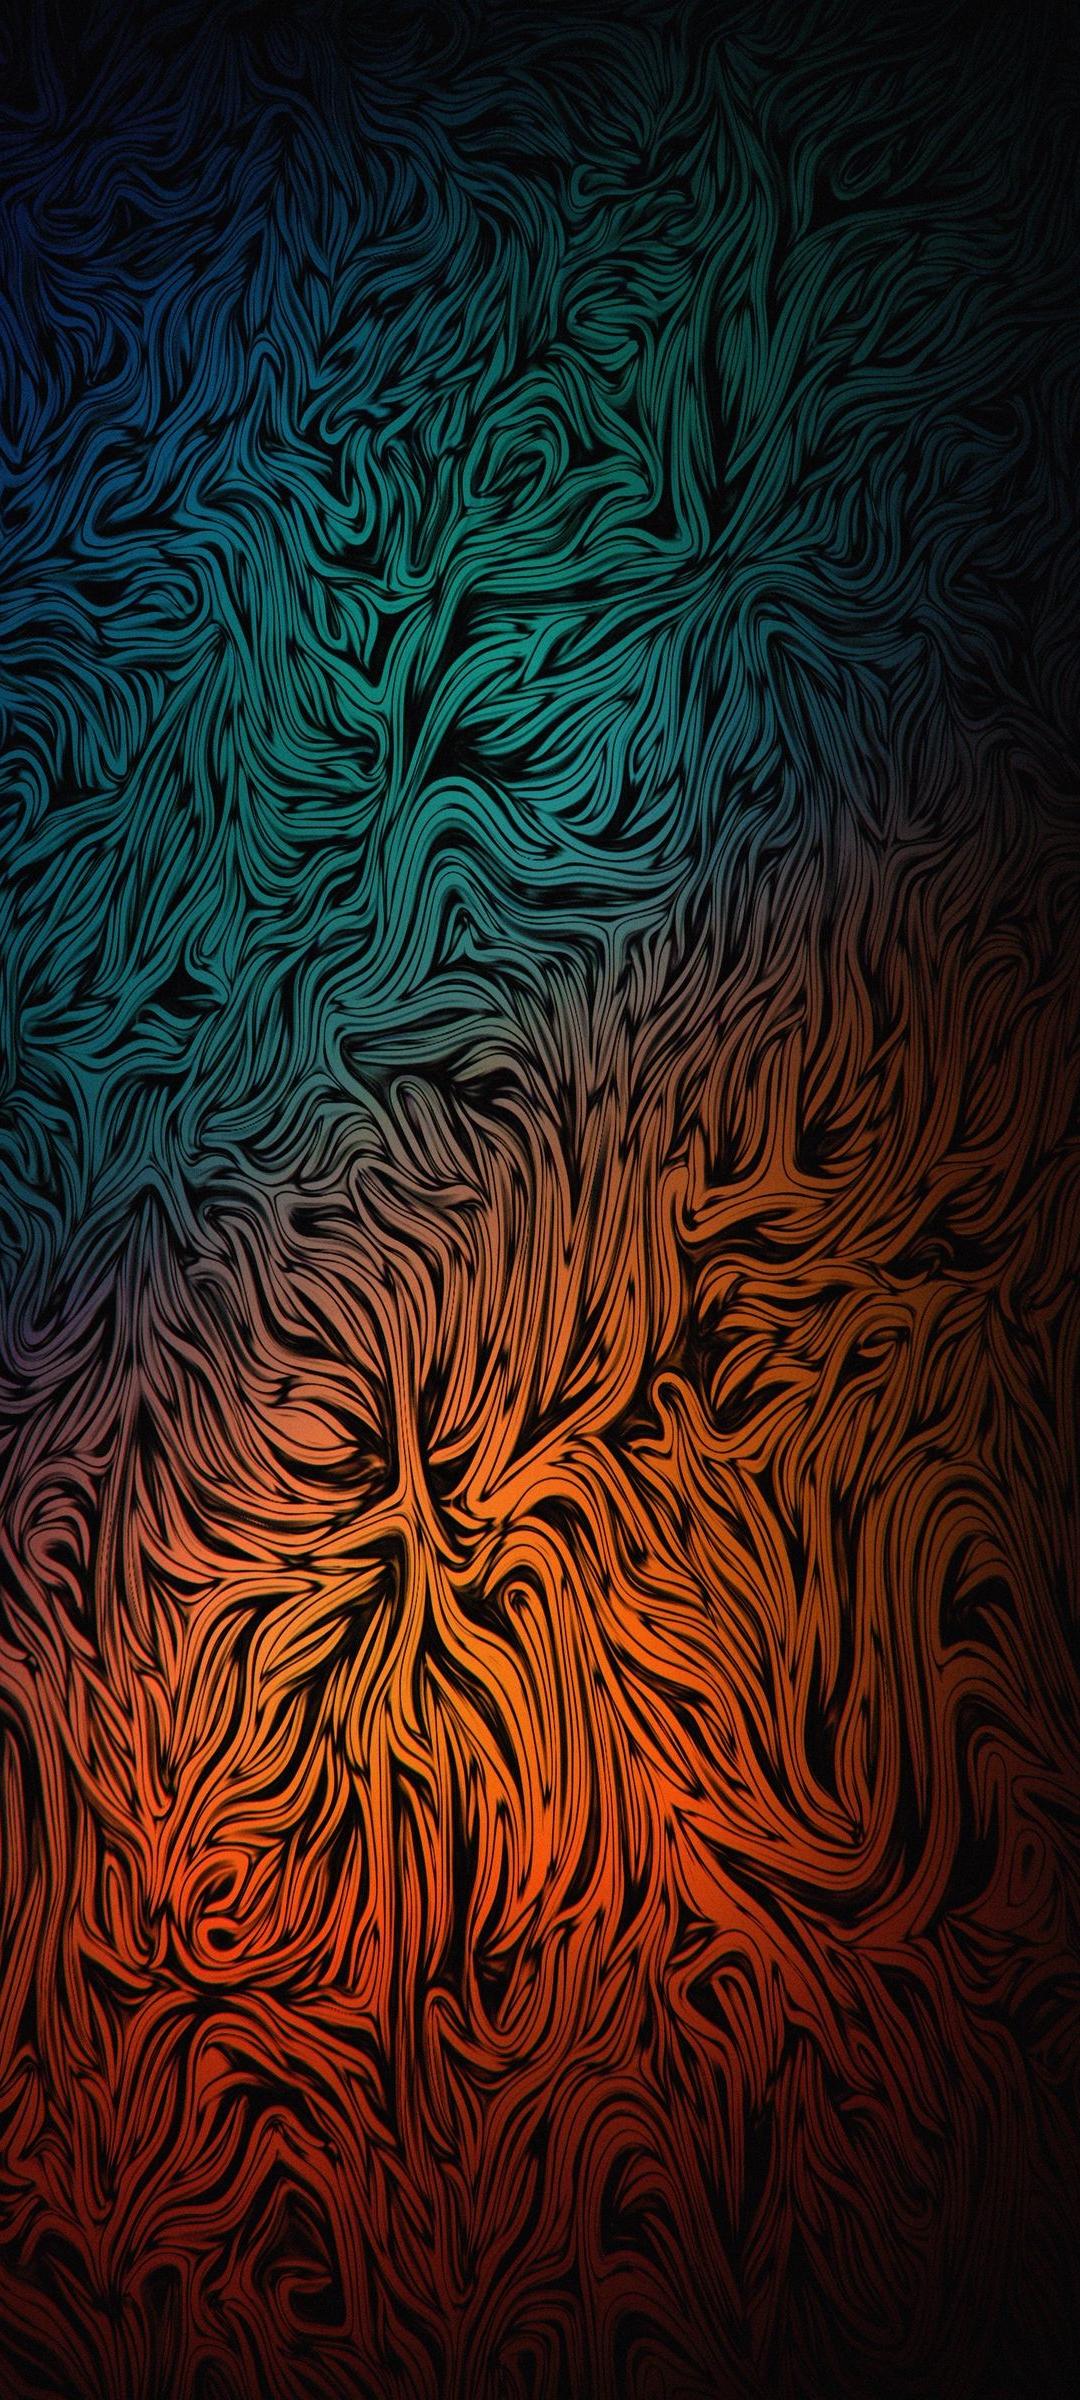 Abstract Wallpaper , iphone 13 pro max wallpaper, Best iPhone Wallpaper and iPhone background, WallpaperUpdate, Best iPhone Wallpaper and iPhone background